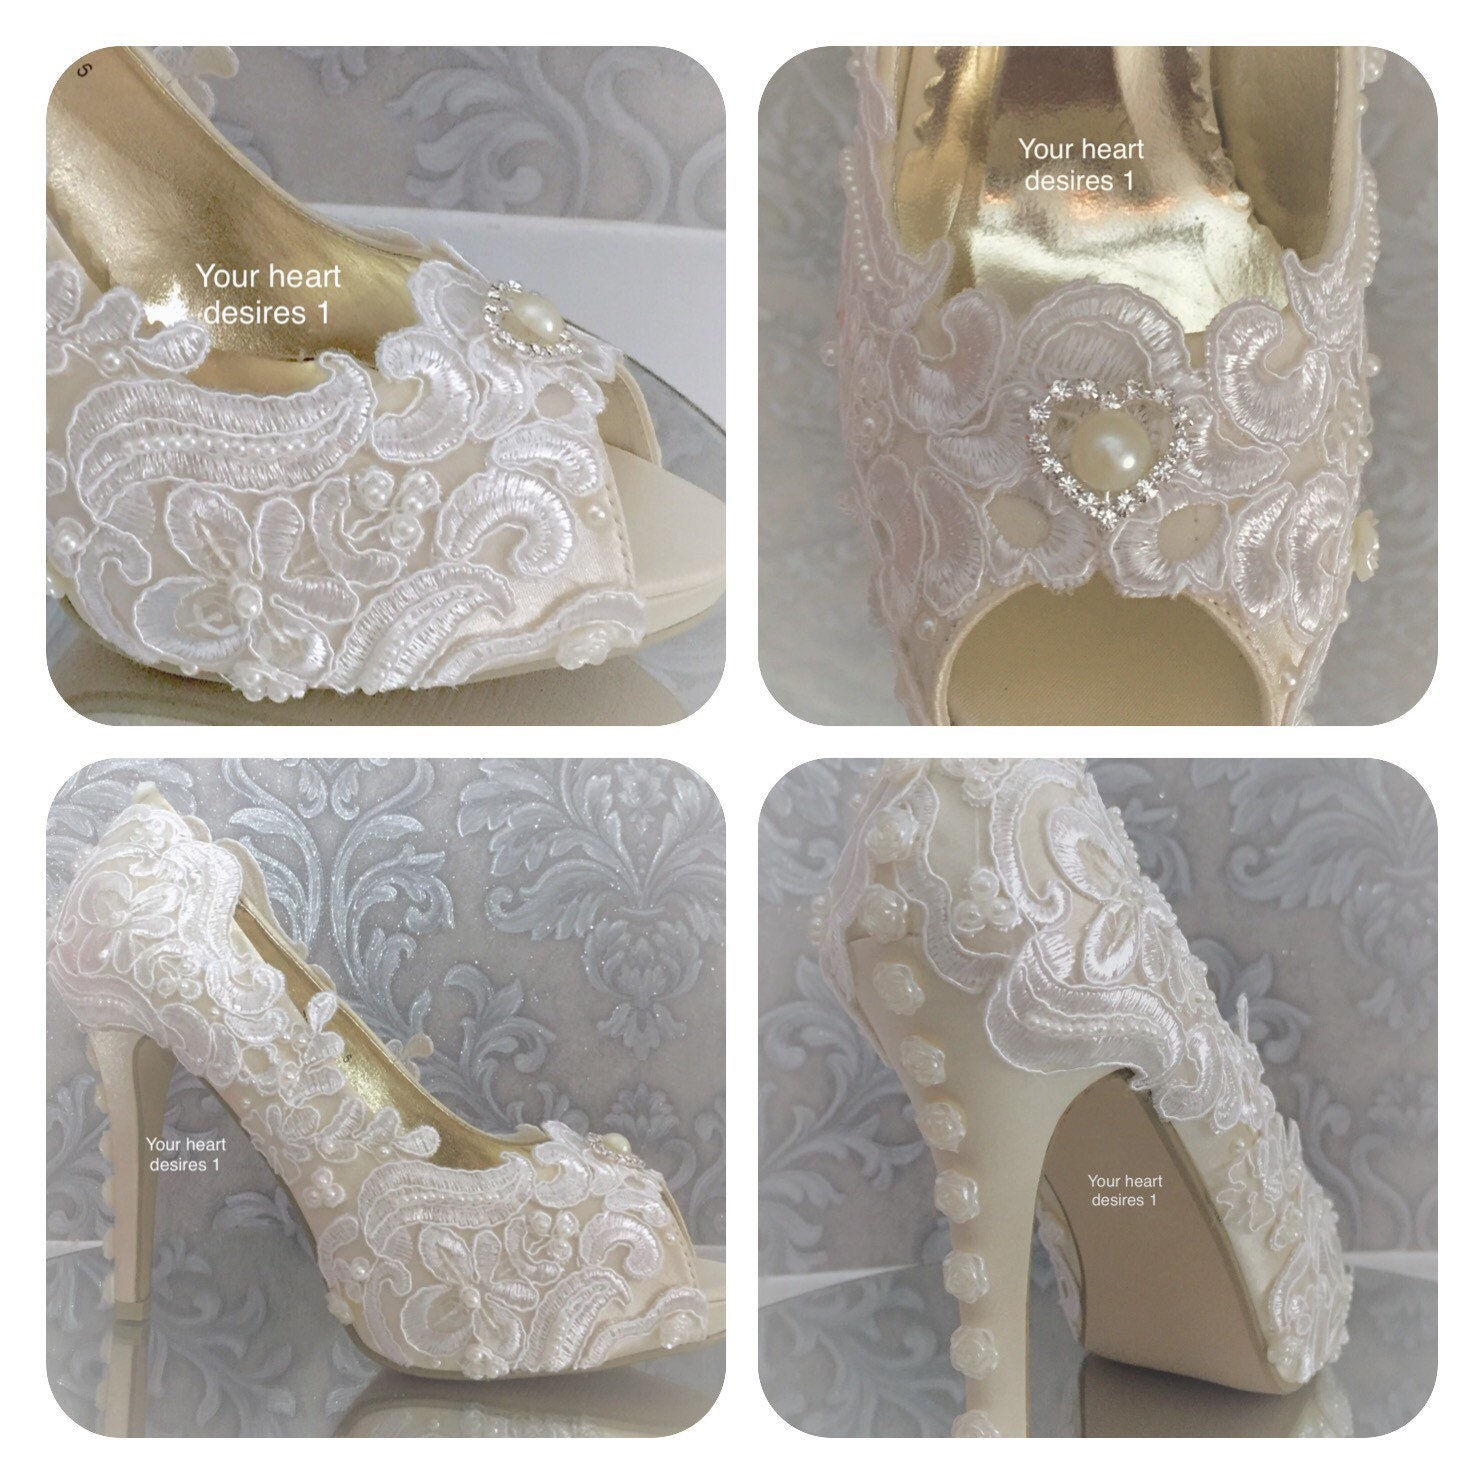 Lace applique shoes wedding heels bridal pumps | Etsy